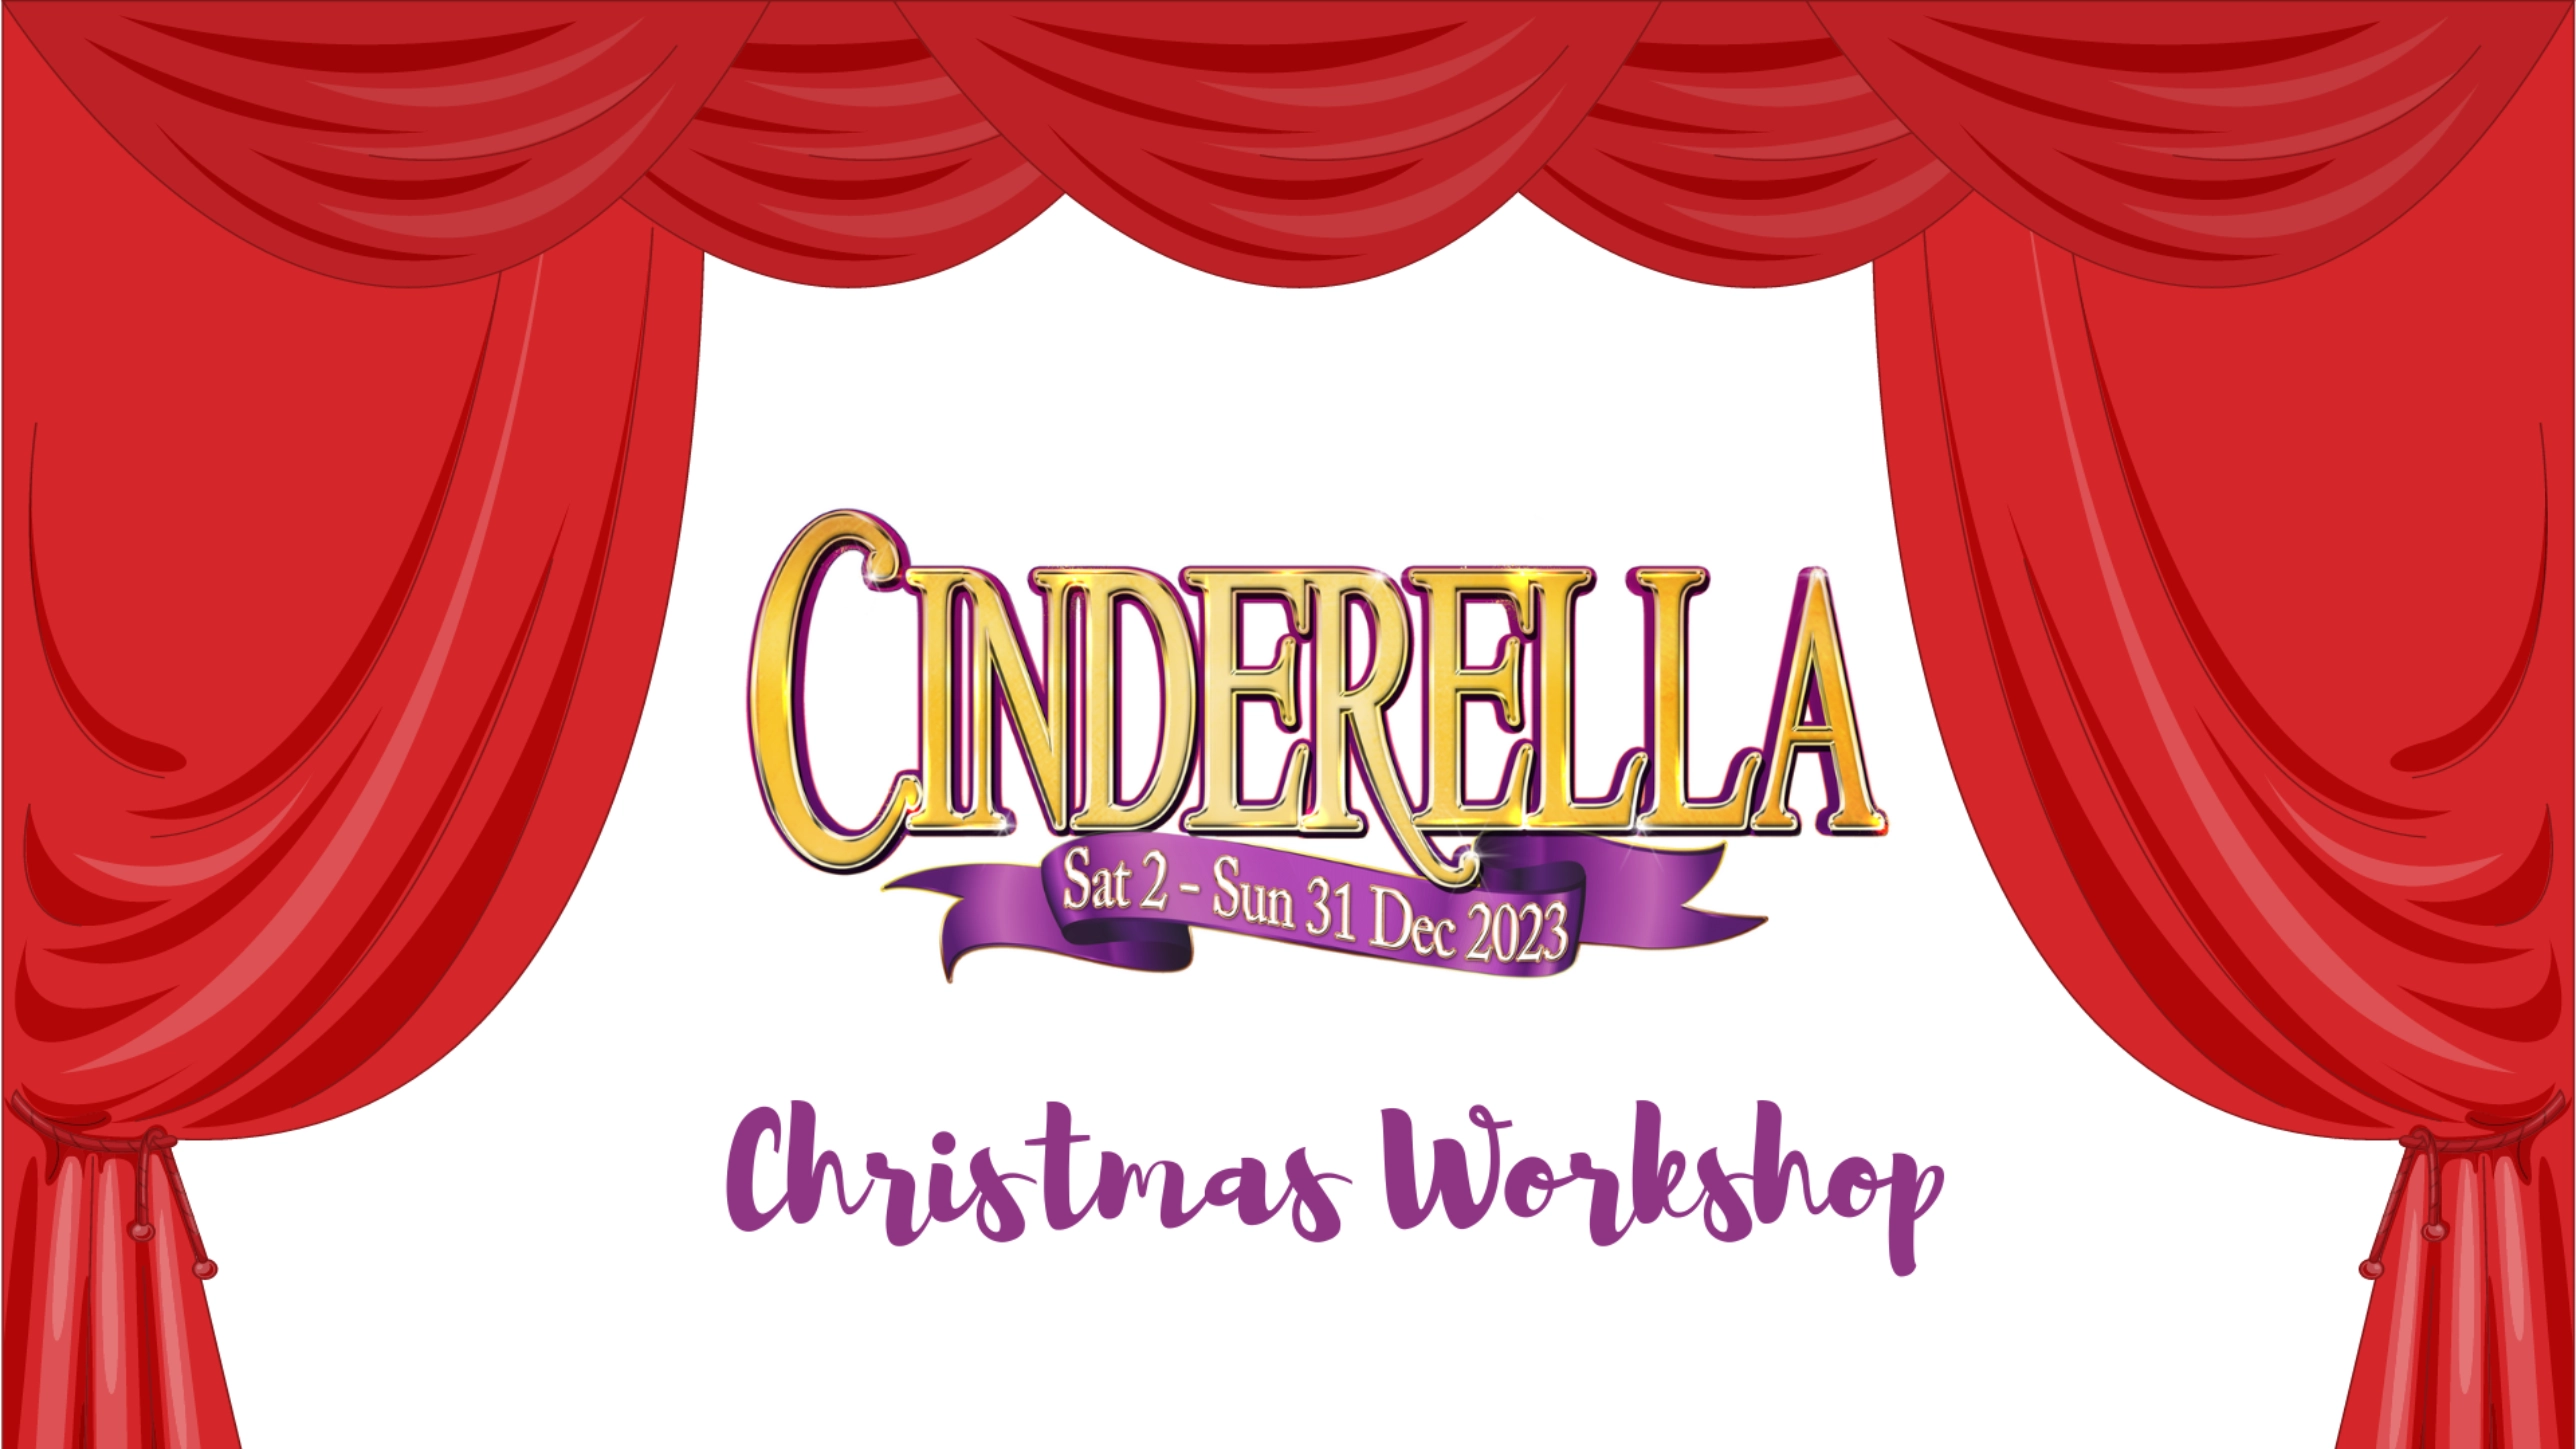 Cinderella Christmas Workshop